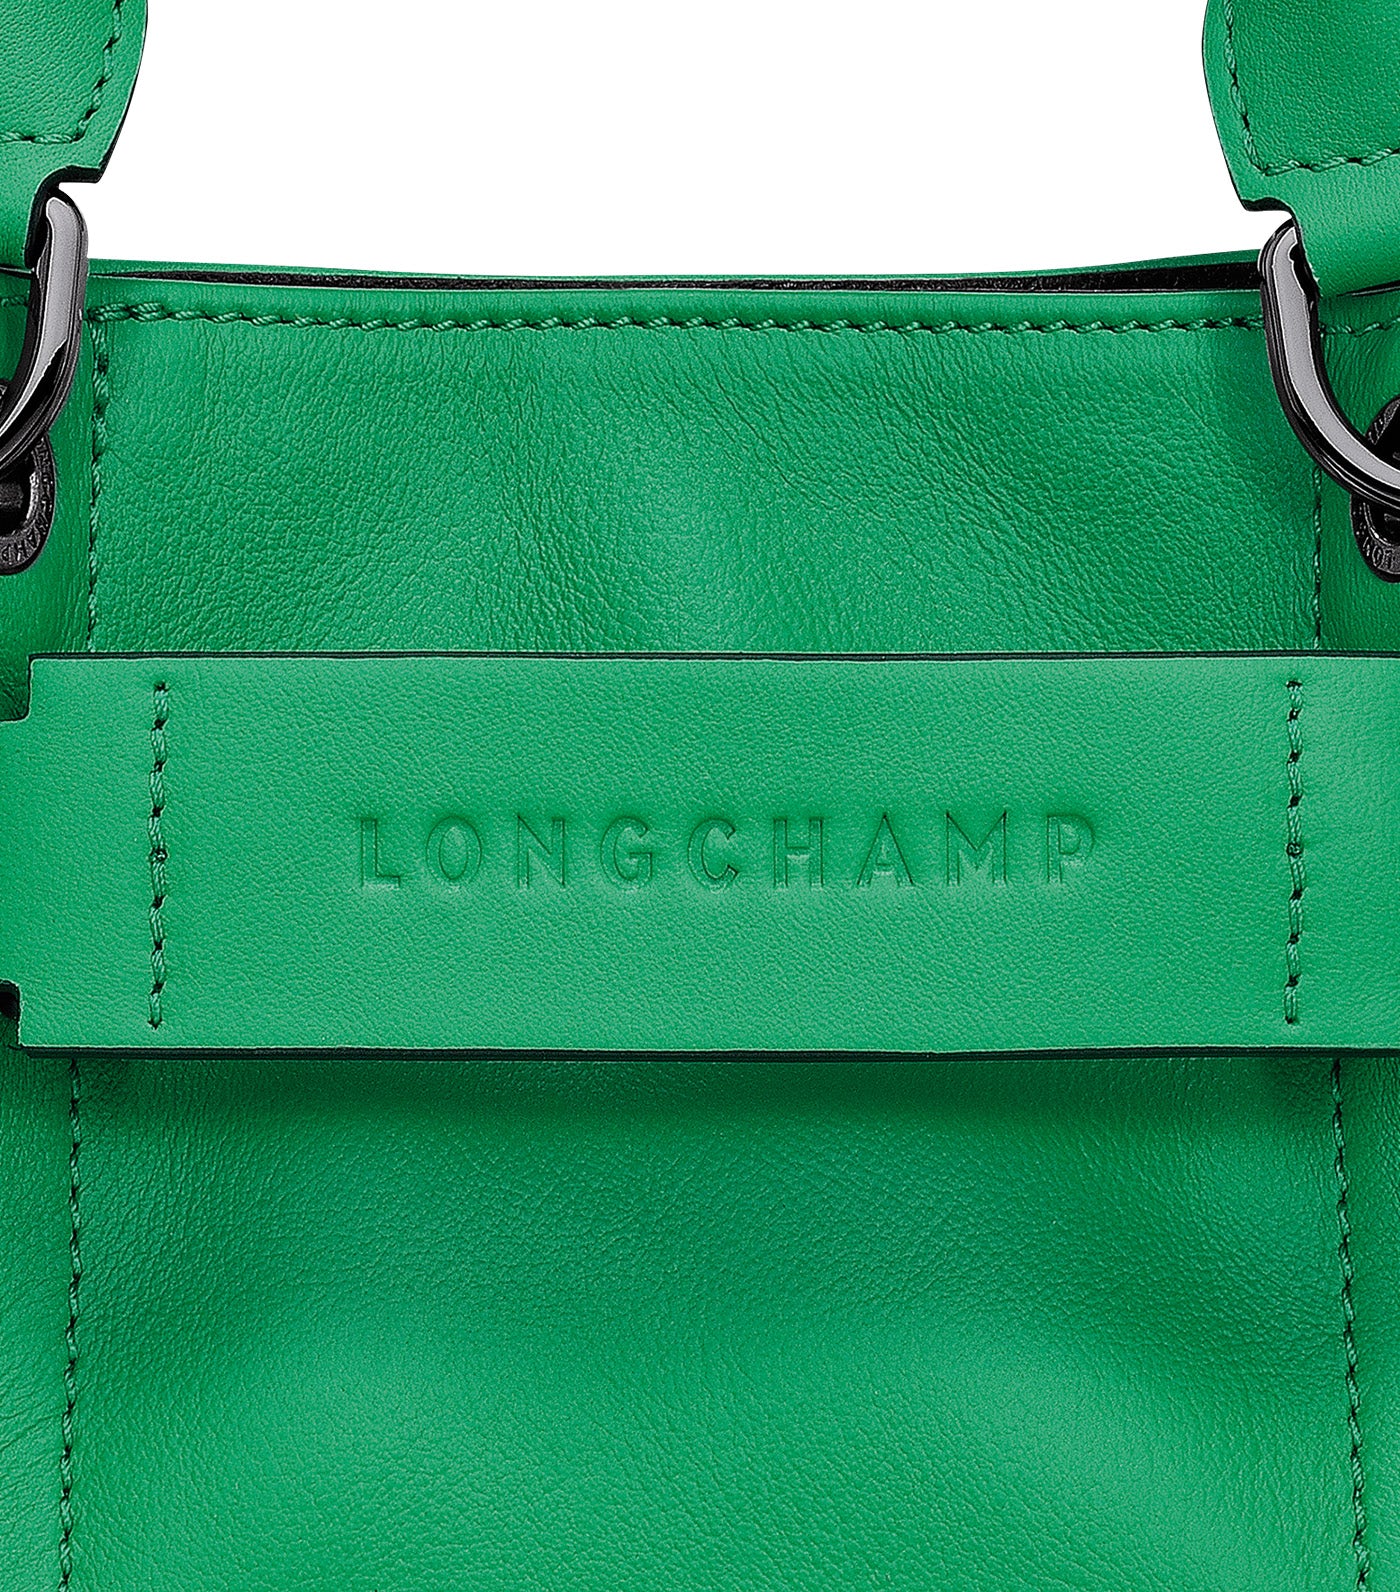 Longchamp 3D Handbag XS Green